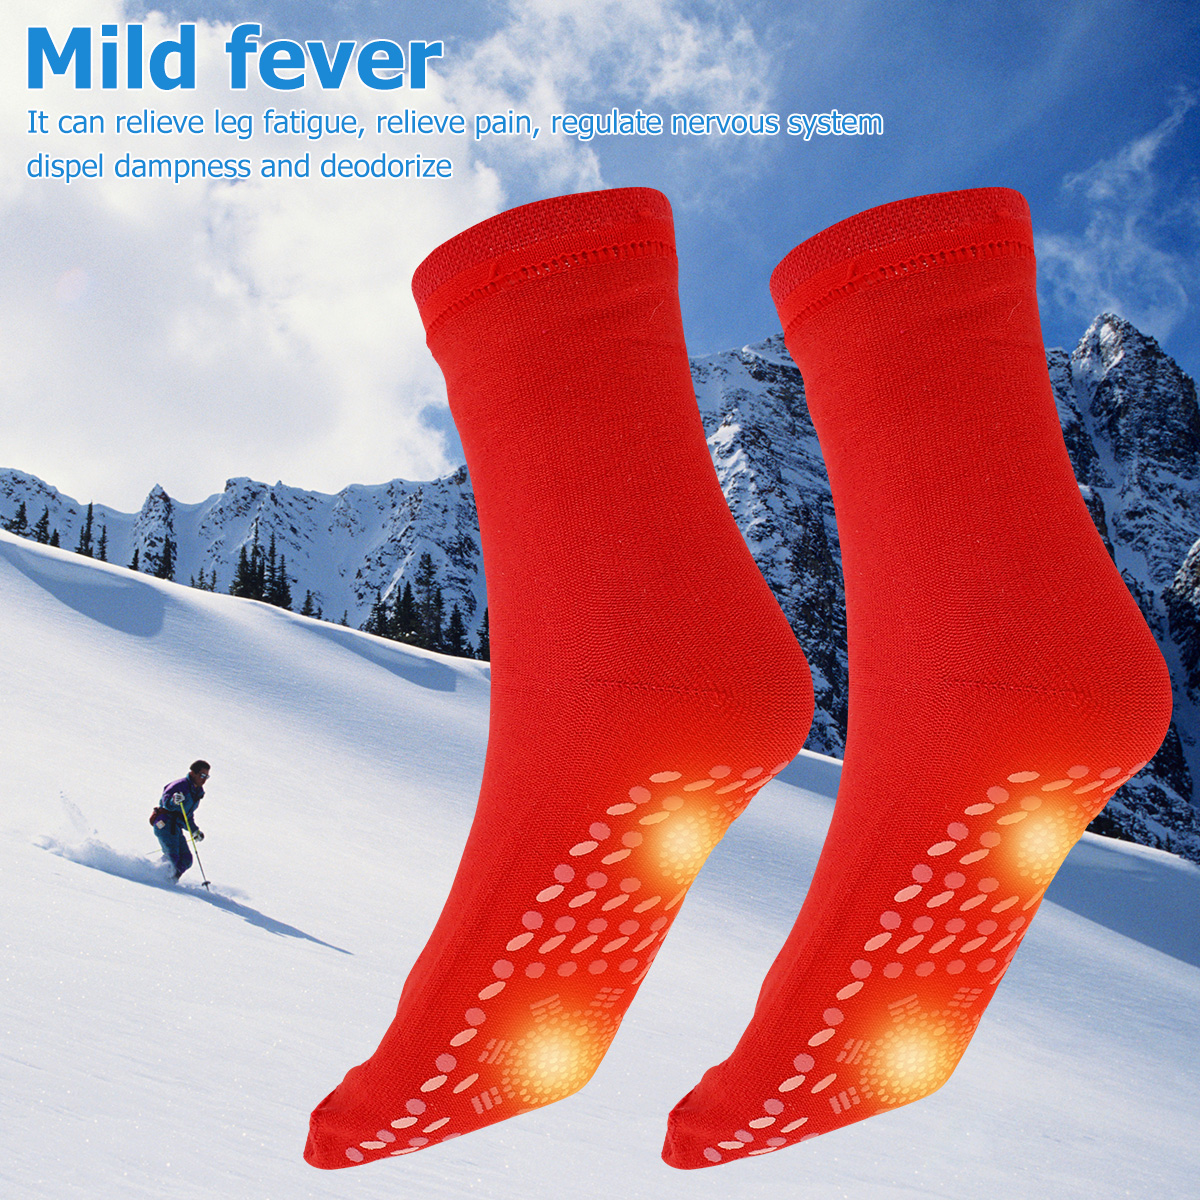 Self-Heating Socks Anti-Fatigue Winter Outdoor Warm Heat Insulated Socks Thermal Socks for Hiking Camping Cycling Skiing